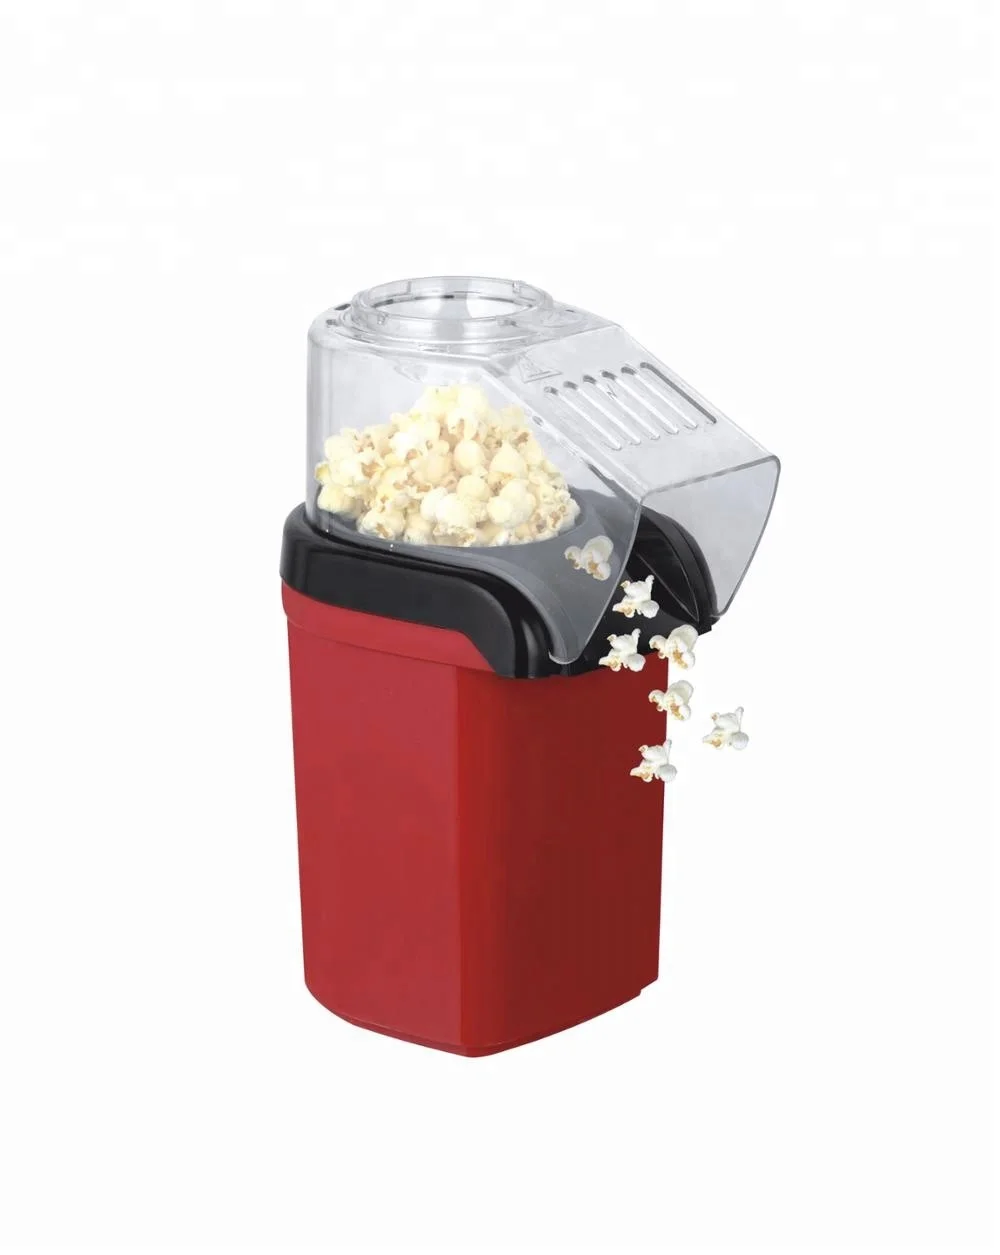 home popcorn maker